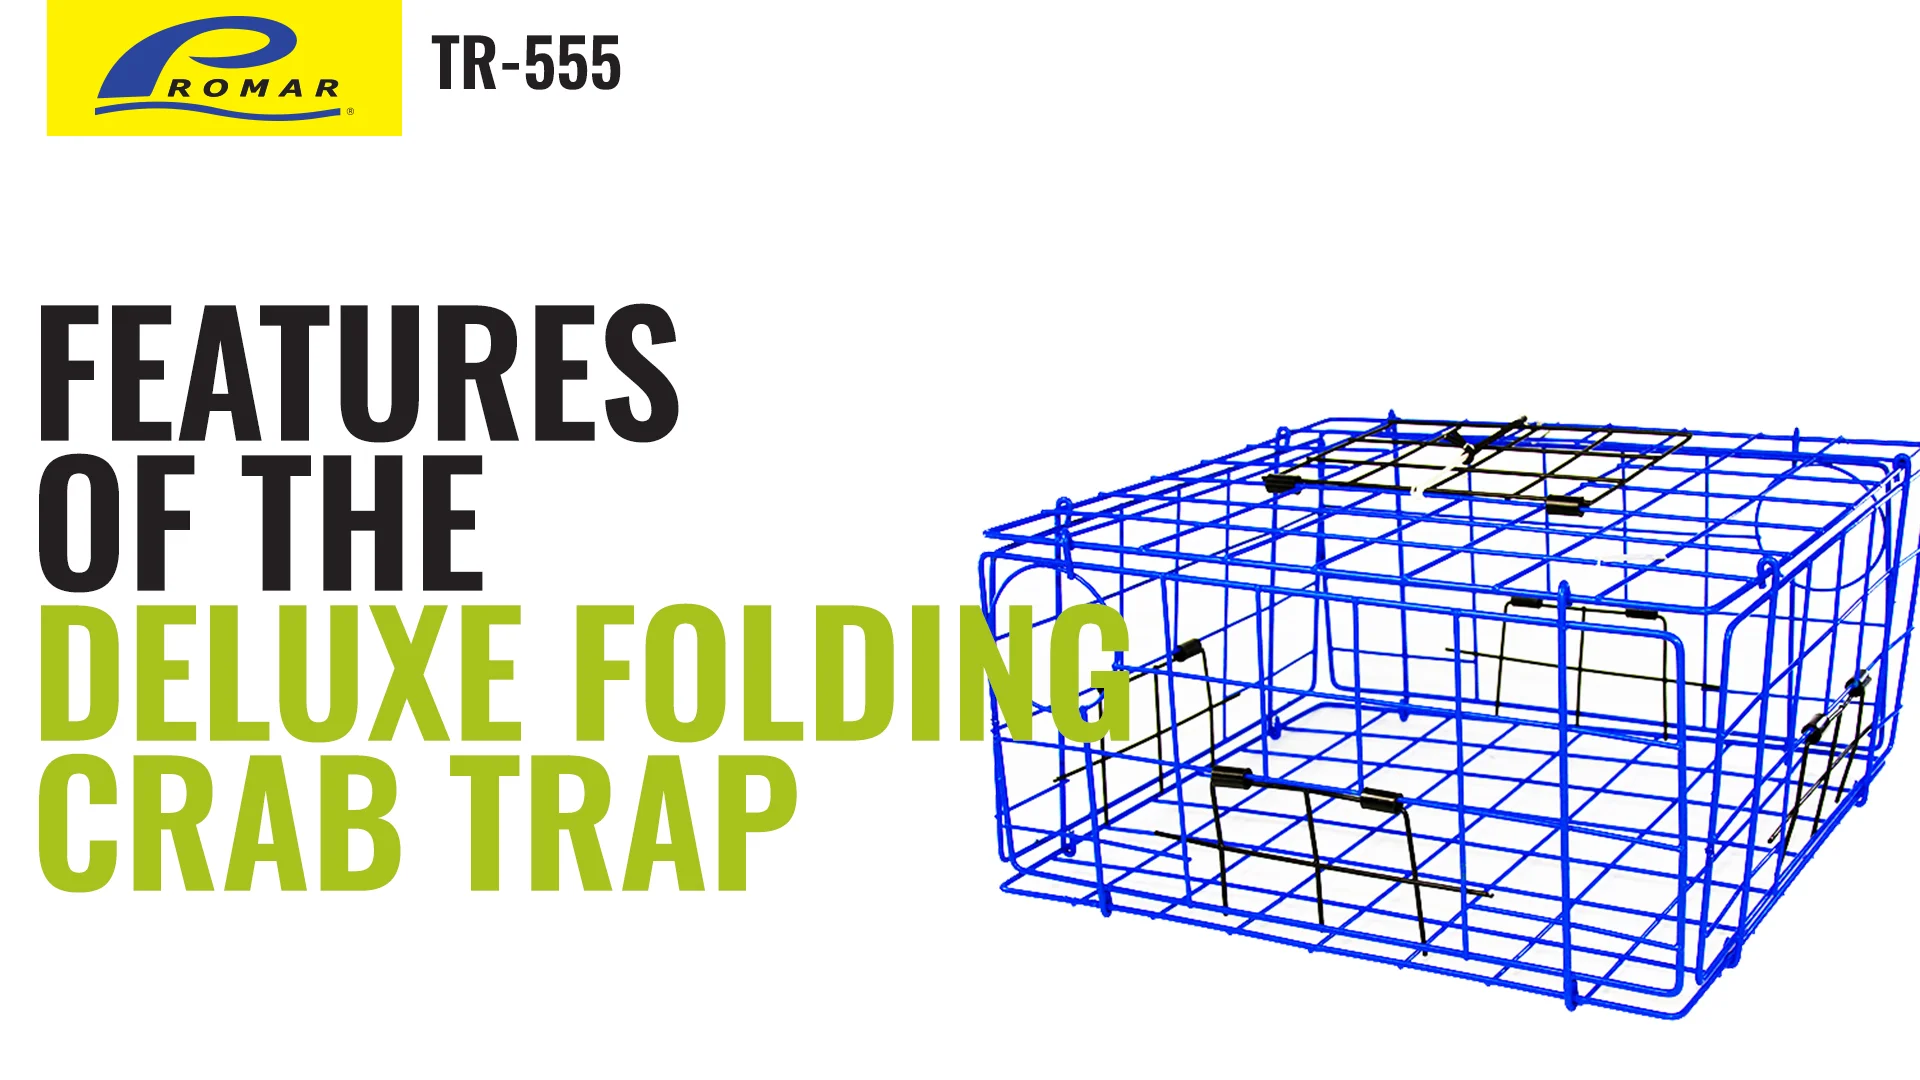 Promar Deluxe Folding Crab Trap (TR-555) on Vimeo